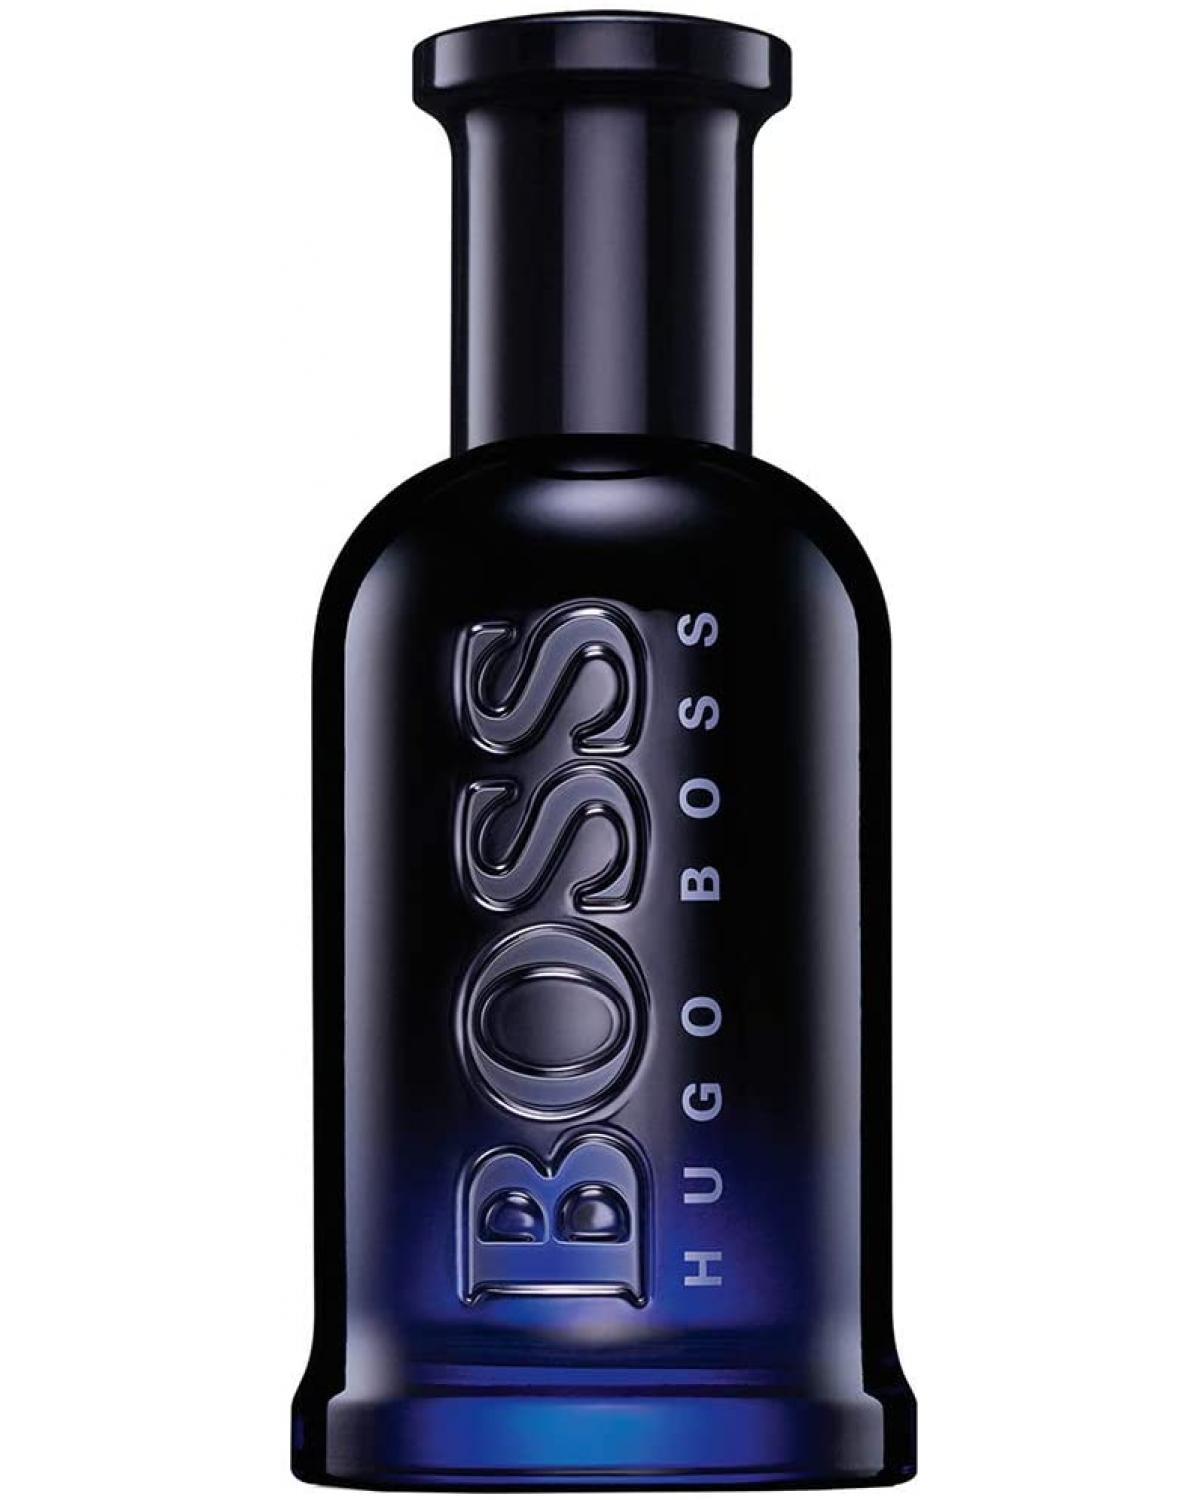 Boss Bottled Night Hugo Boss - Perfume Masculino - Eau de Toilette - 30ml